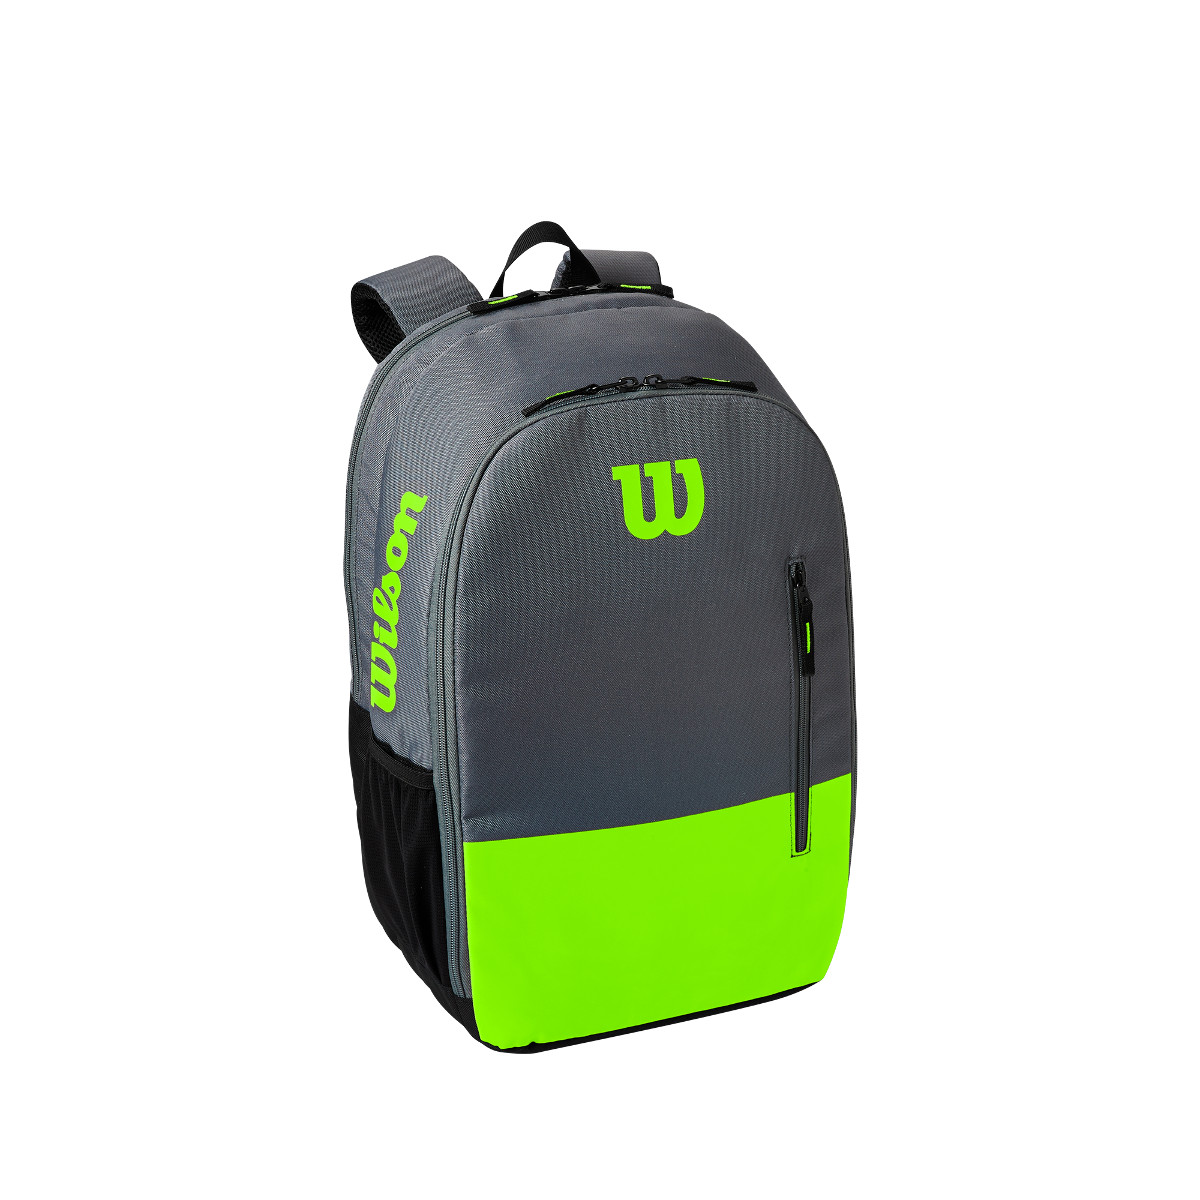 Wilson Team grau grün Backpack Tennisrucksack NEU UVP 45,00€ 